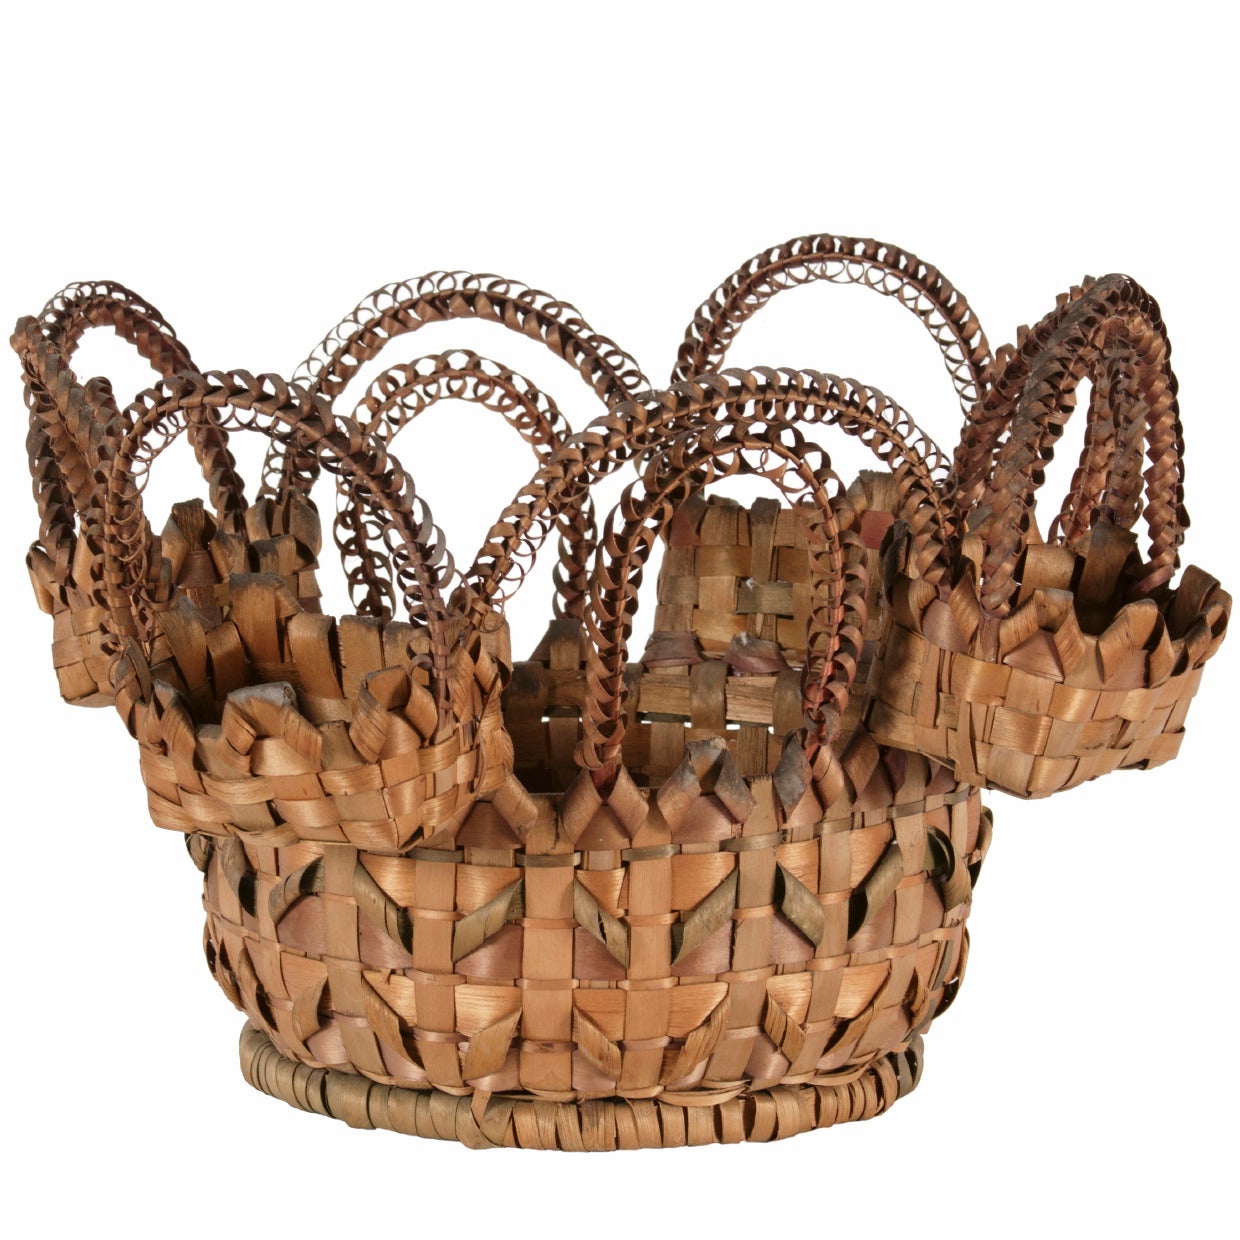 Extraordinary Passamaquoddy (Maine) Native American Sewing Basket, Dated 1891